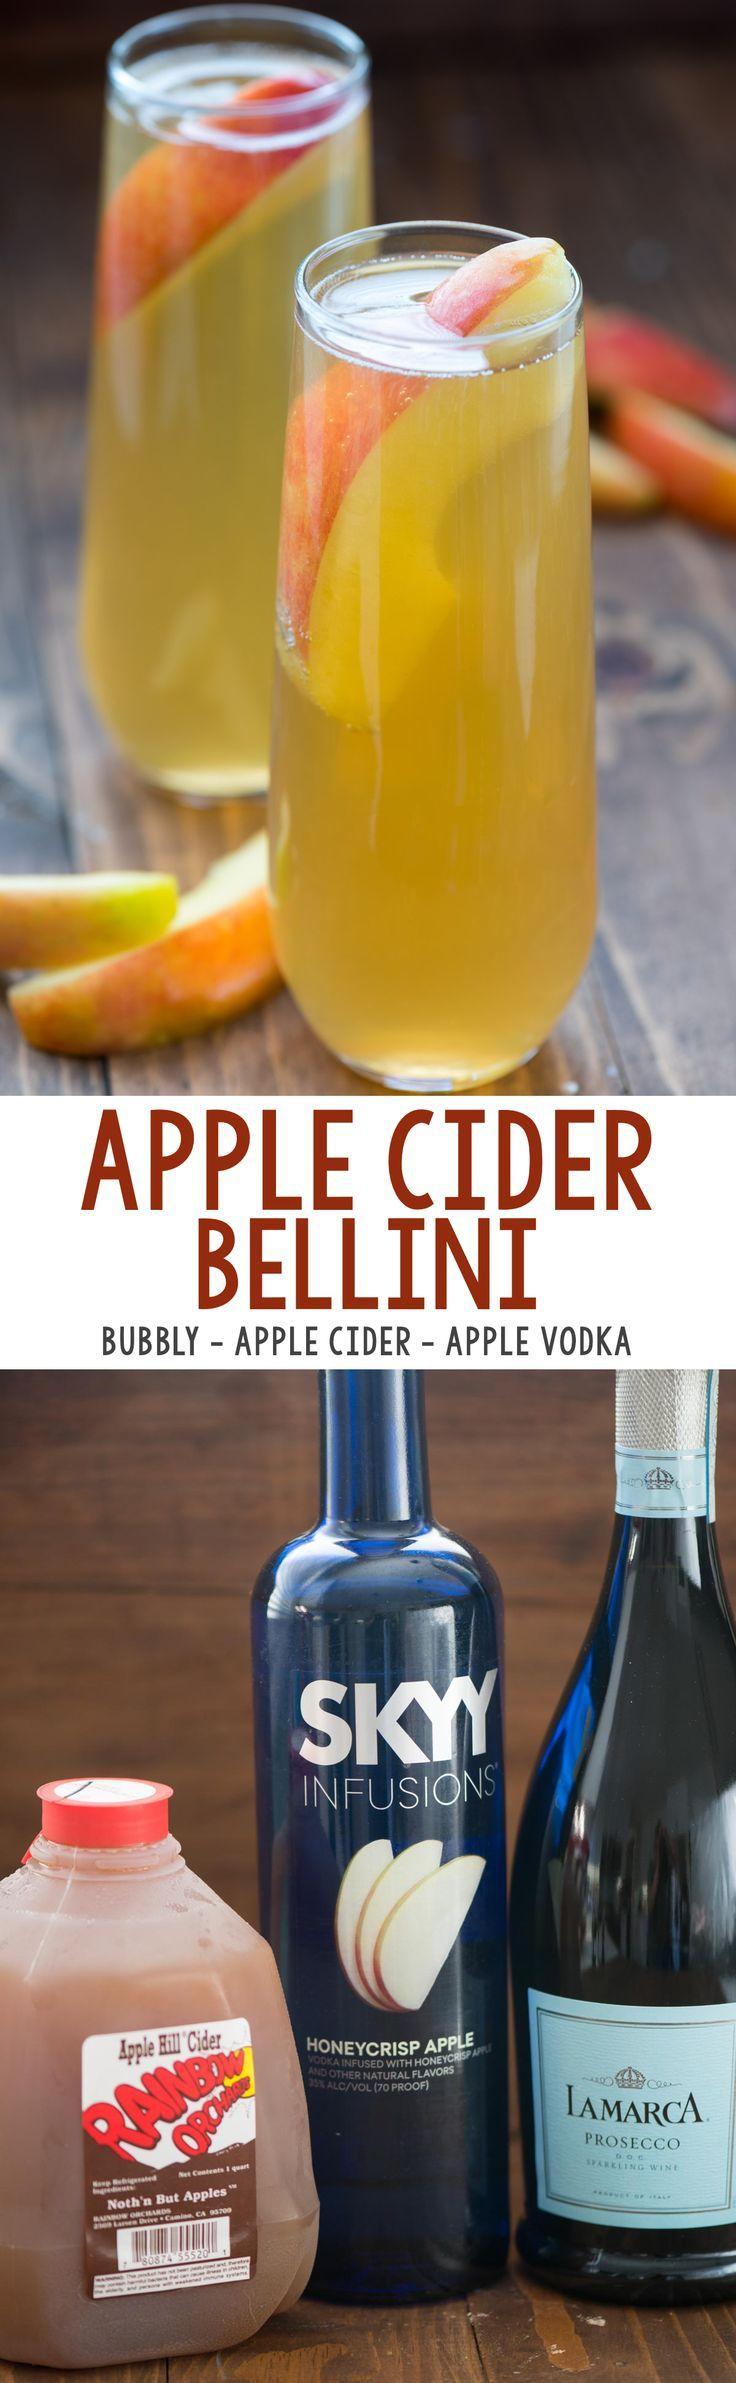 Wedding - Apple Cider Bellini